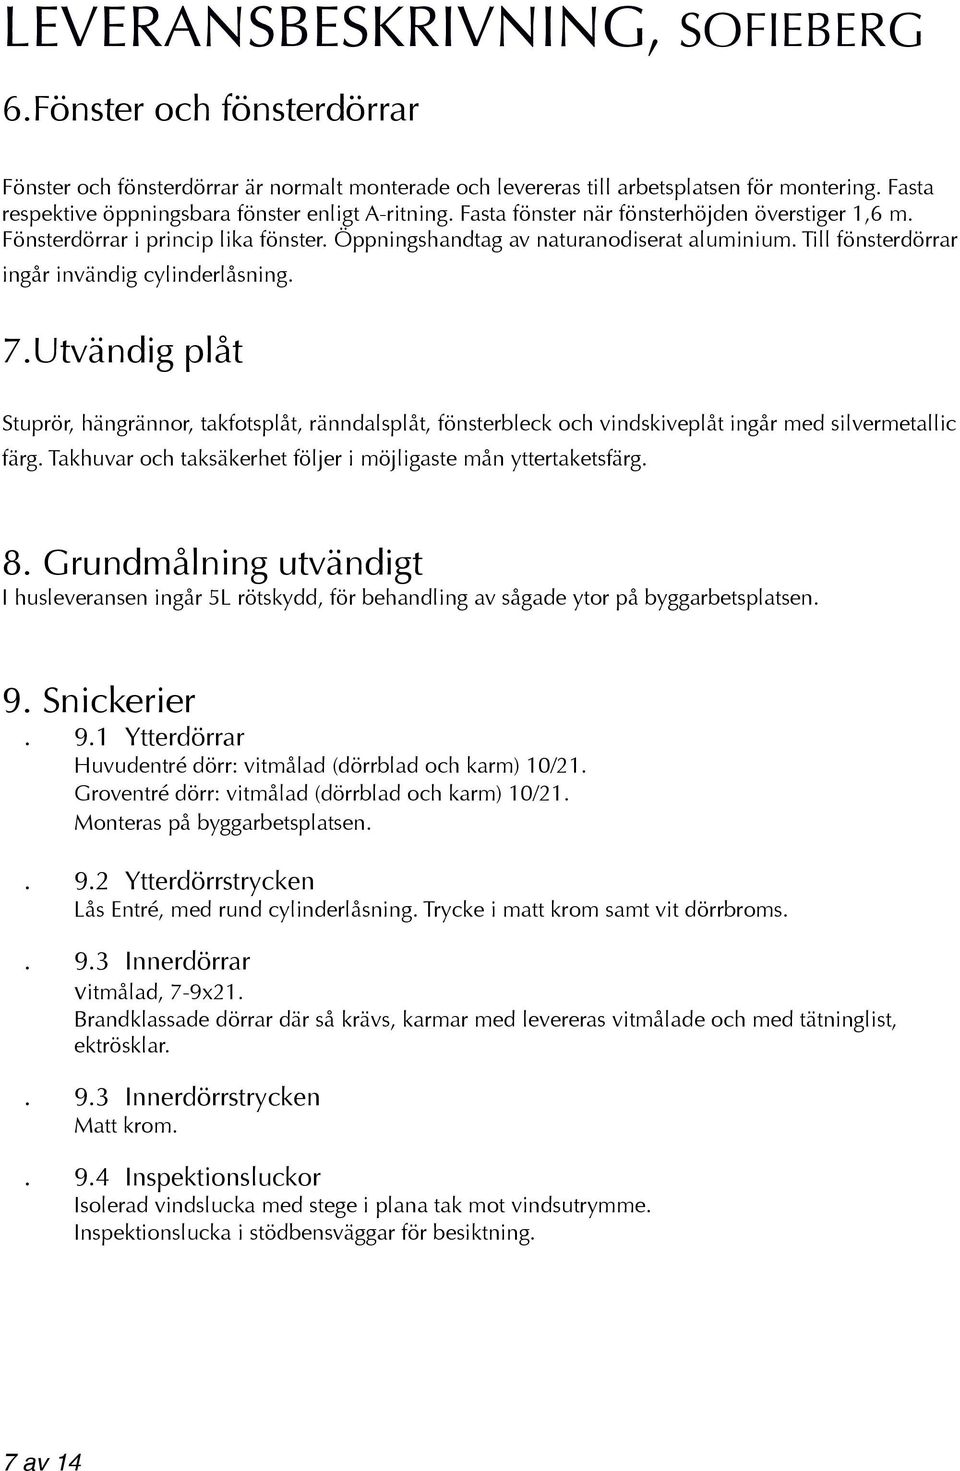 Sofieberg Norra Halmstad - PDF Free Download